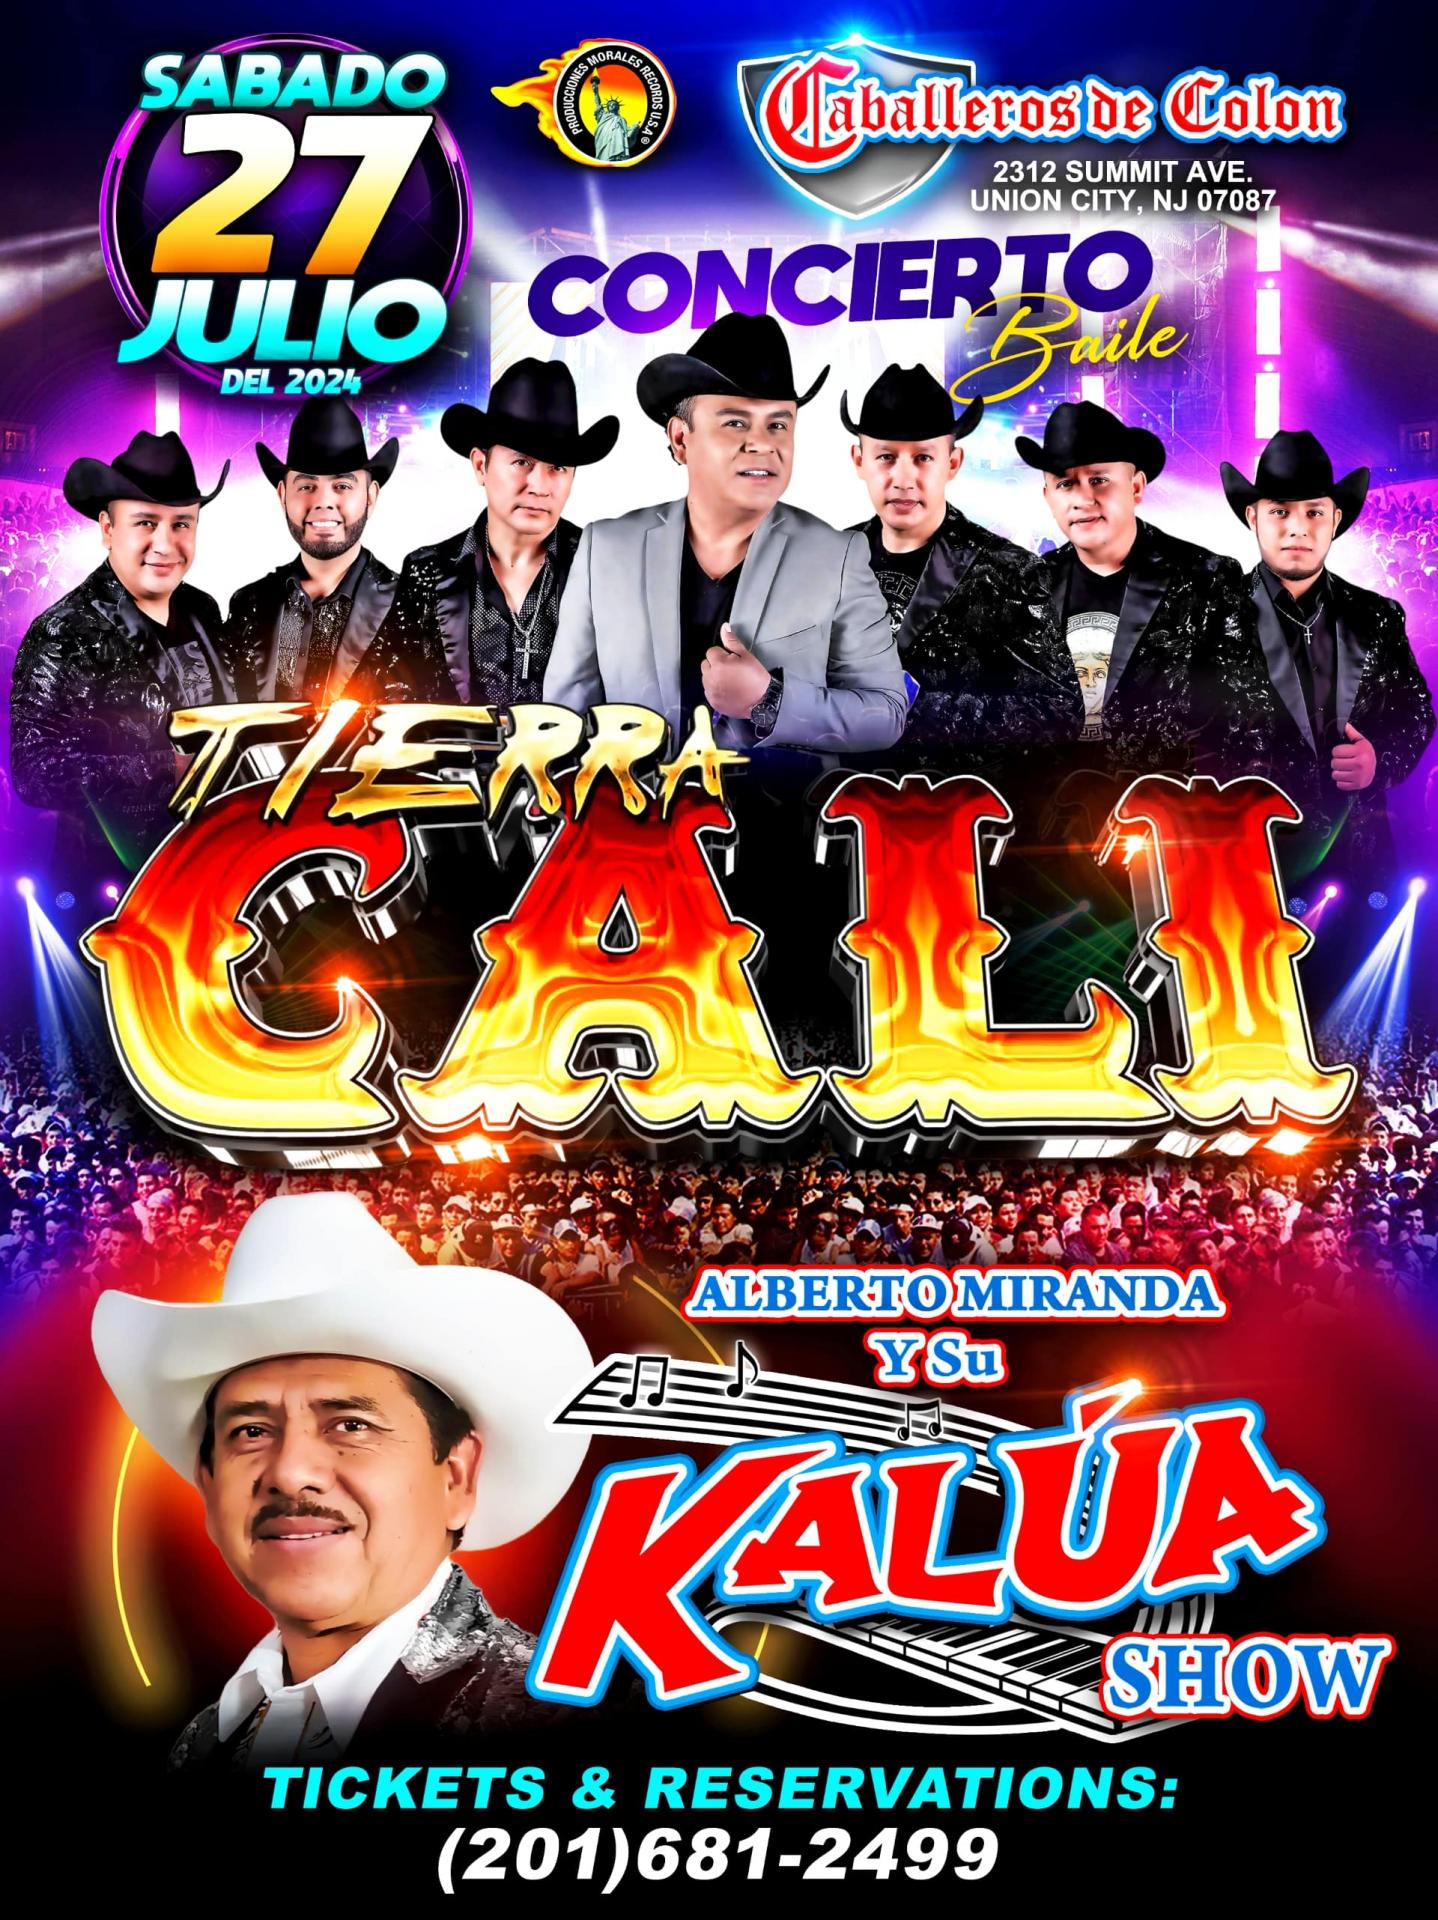 Tierra Cali & Kalua Show